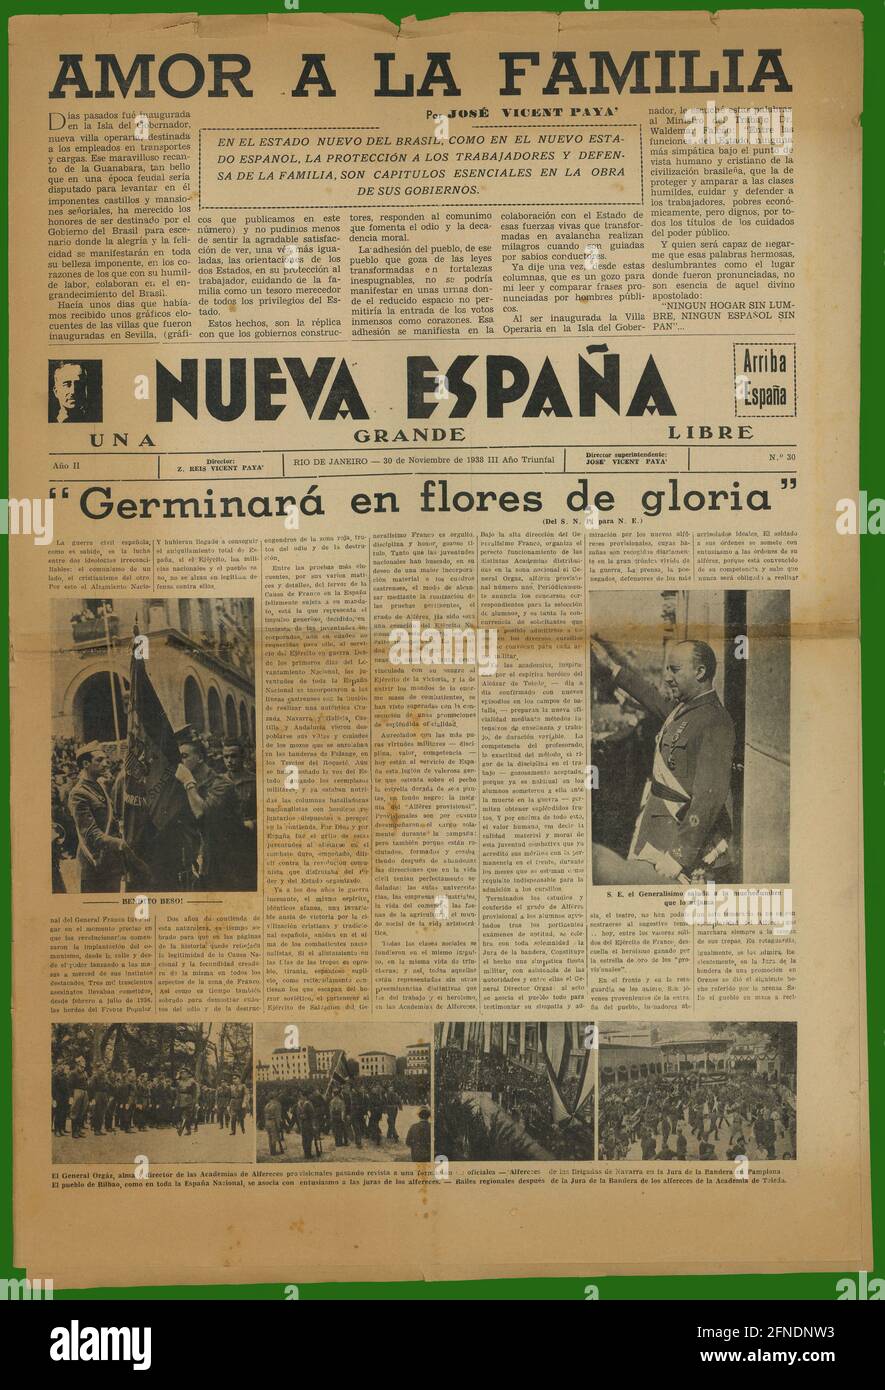 Guerra civil española (1936-1939). Portada del periódico nacional Nueva España, editado en Rio de Janeiro, noviembre de 1938. Stock Photo